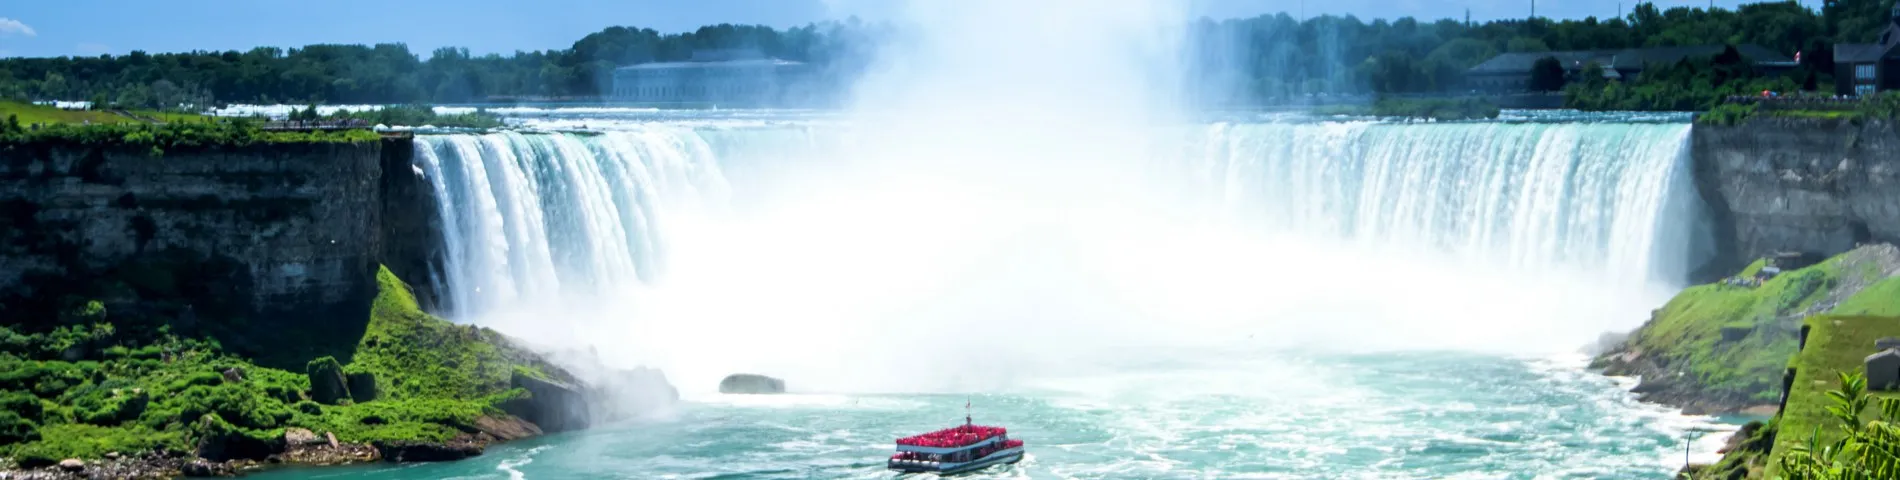 Welland (Niagara Falls) - 